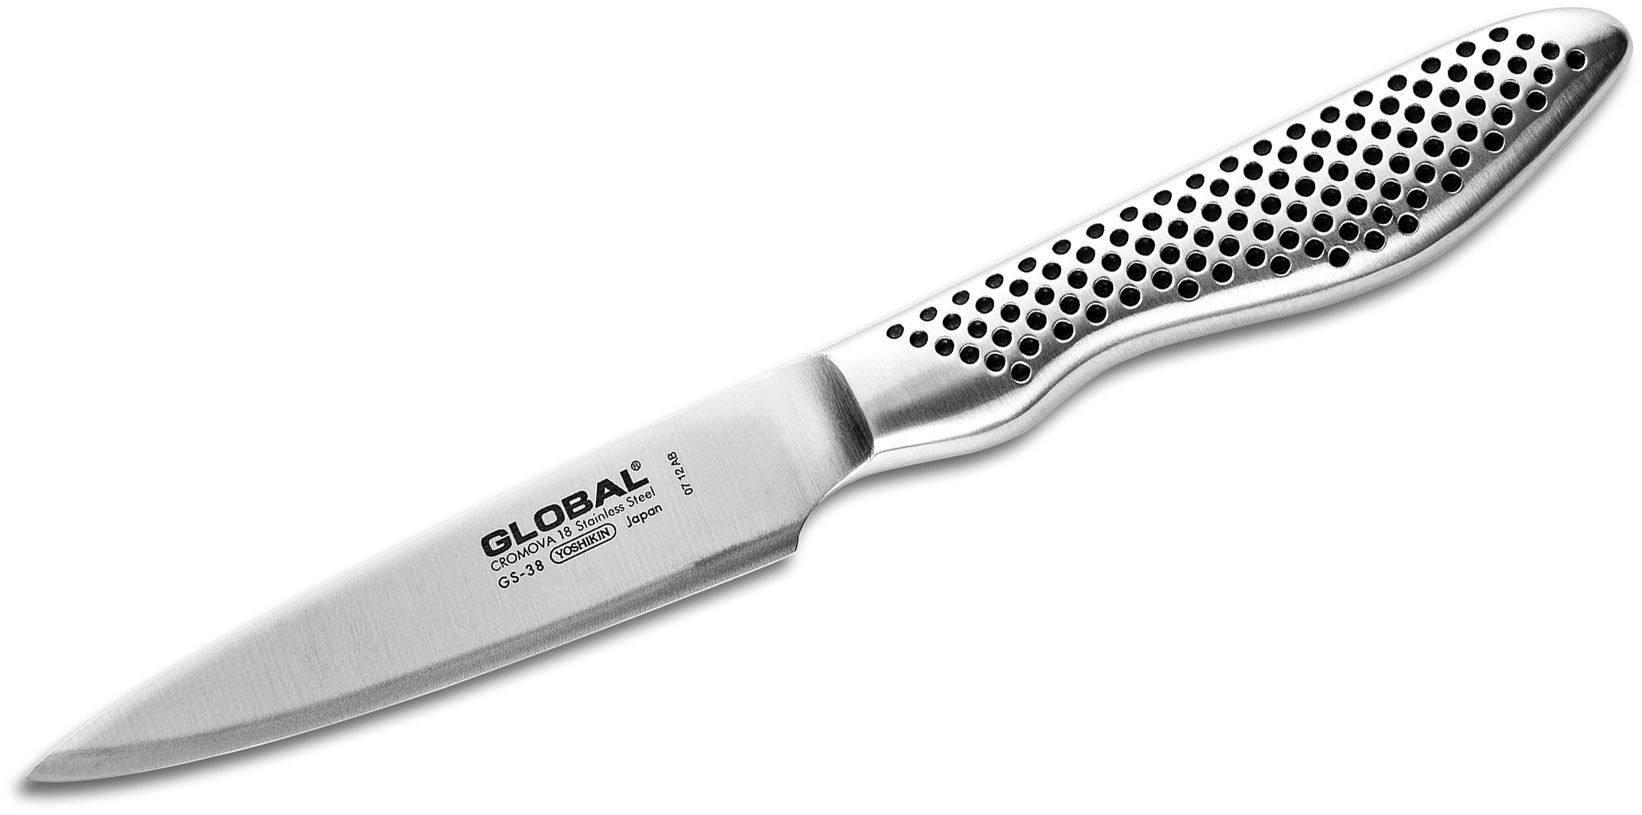  Global 3 Paring Knife : Home & Kitchen